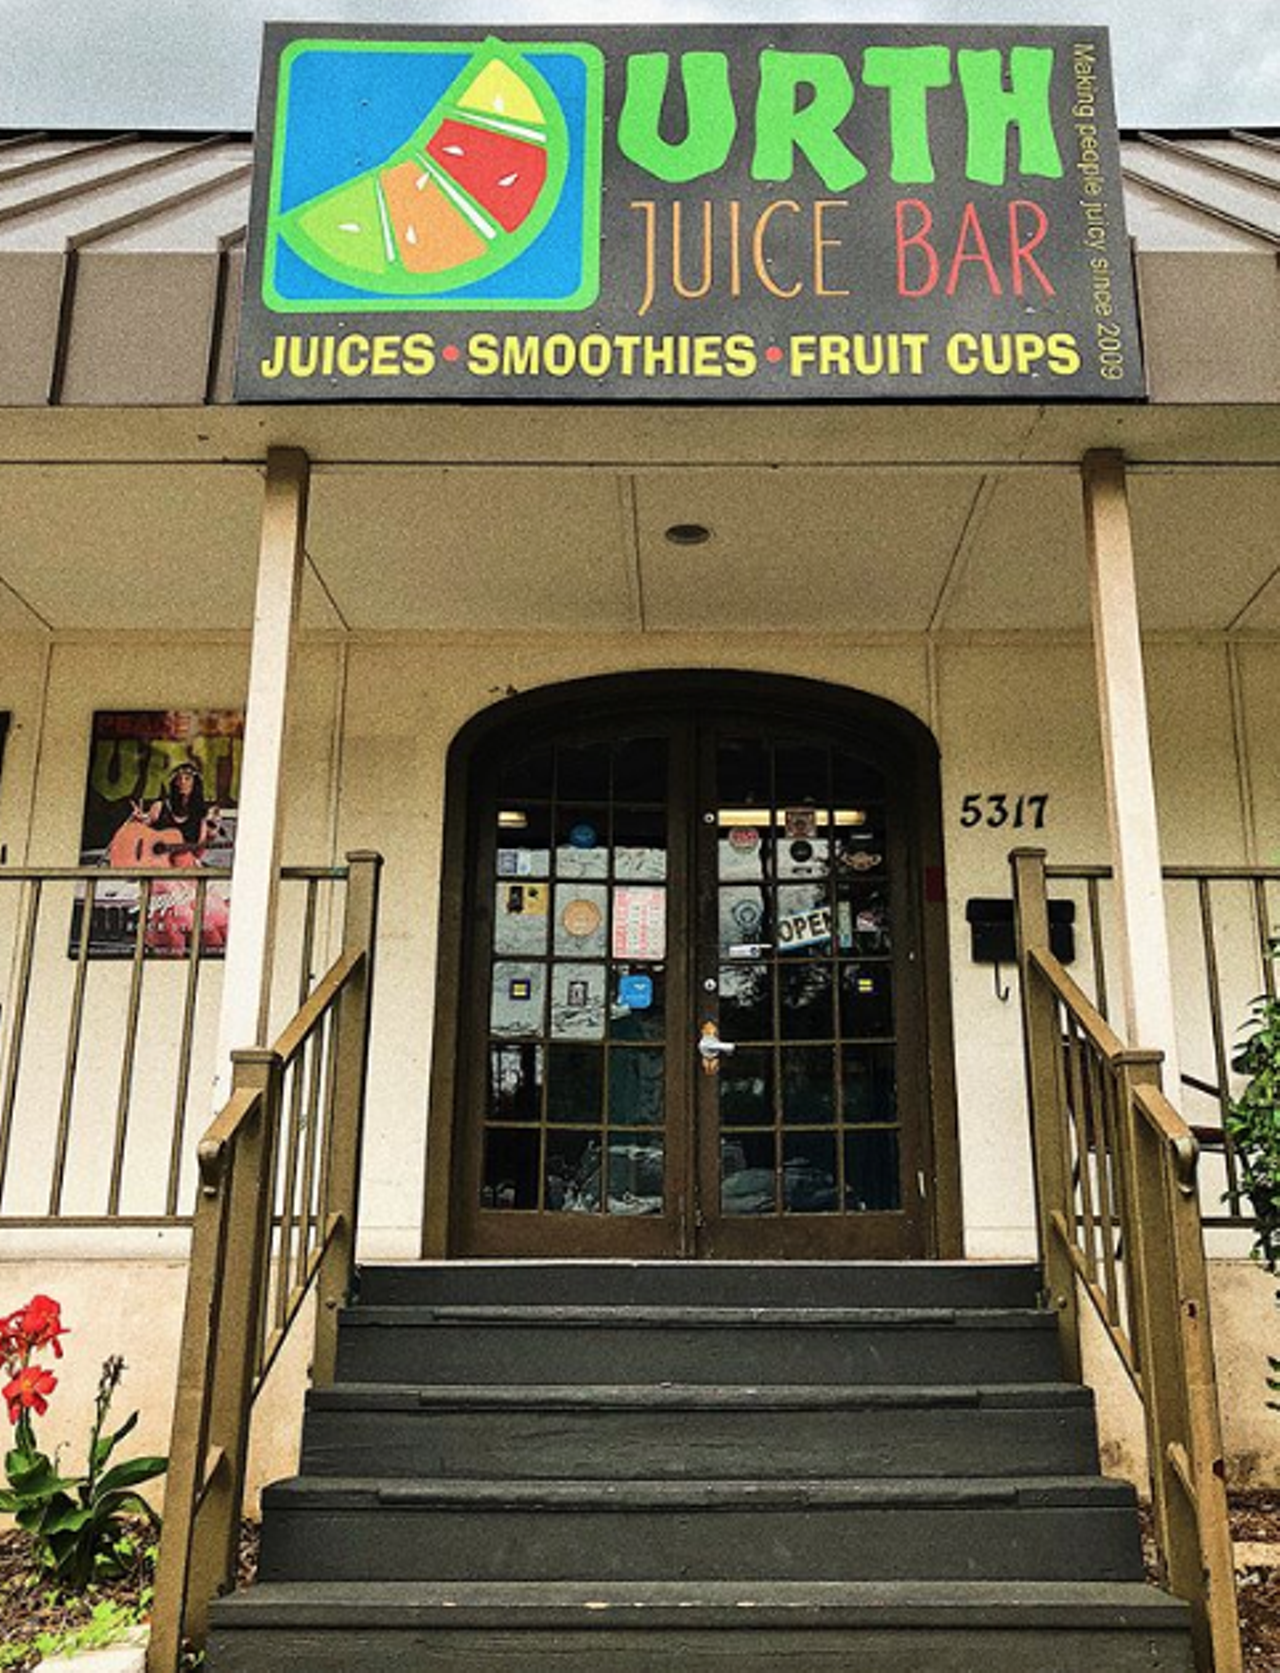 Urth Juice Bar
5317 McCullough Ave, (210) 272-0467, urth-juice-bar-mccullough.business.site
Photo via Instagram / advertisingdude